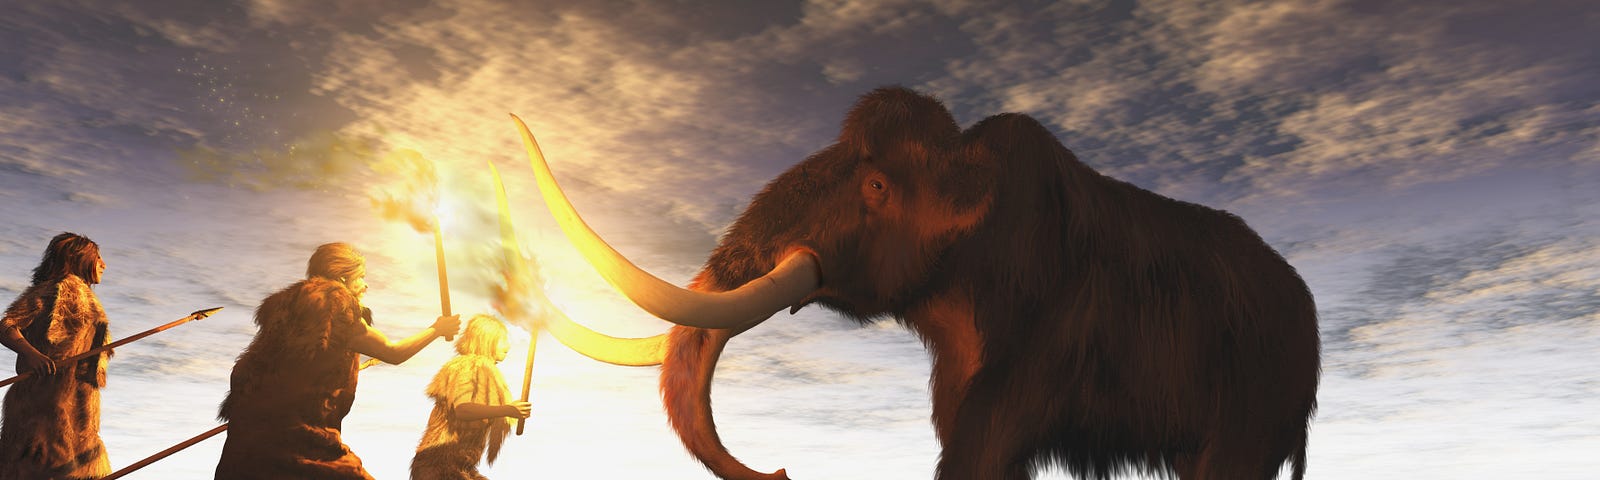 Neanderthals hunting woolly mammoth